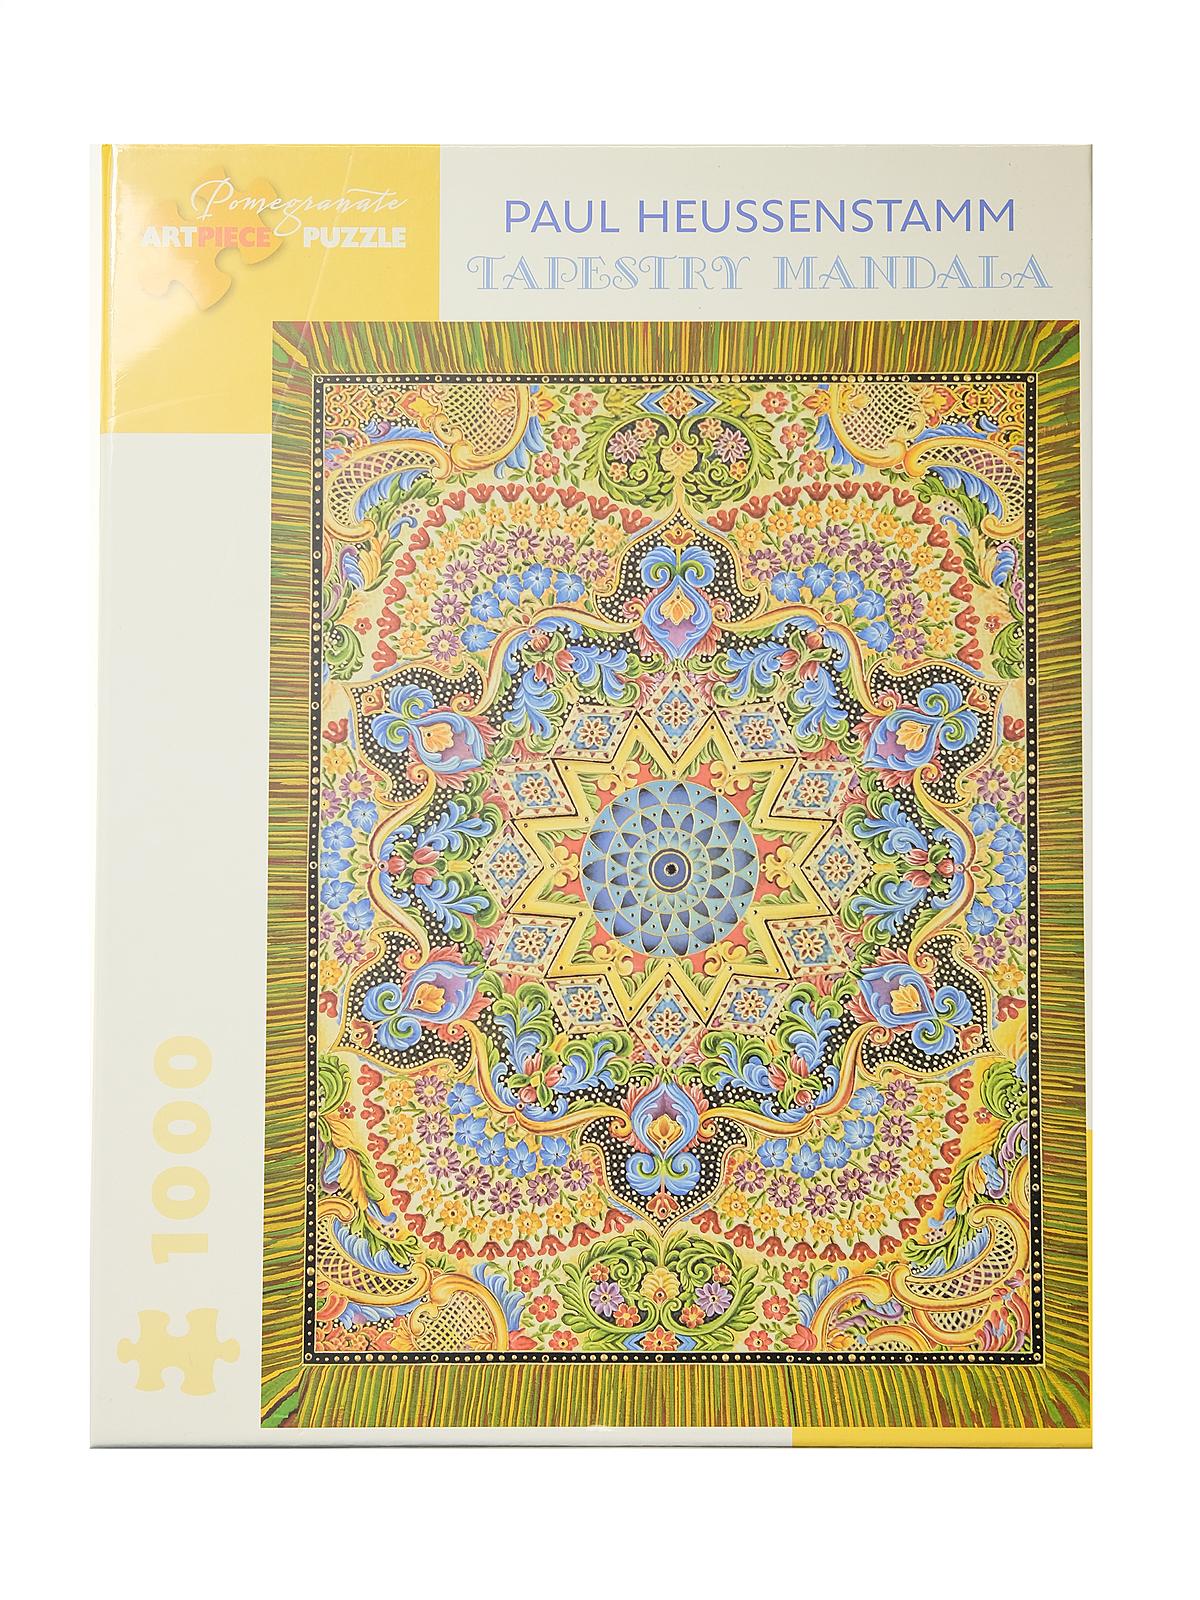 Paul Heussenstamm: Tapestry Mandala